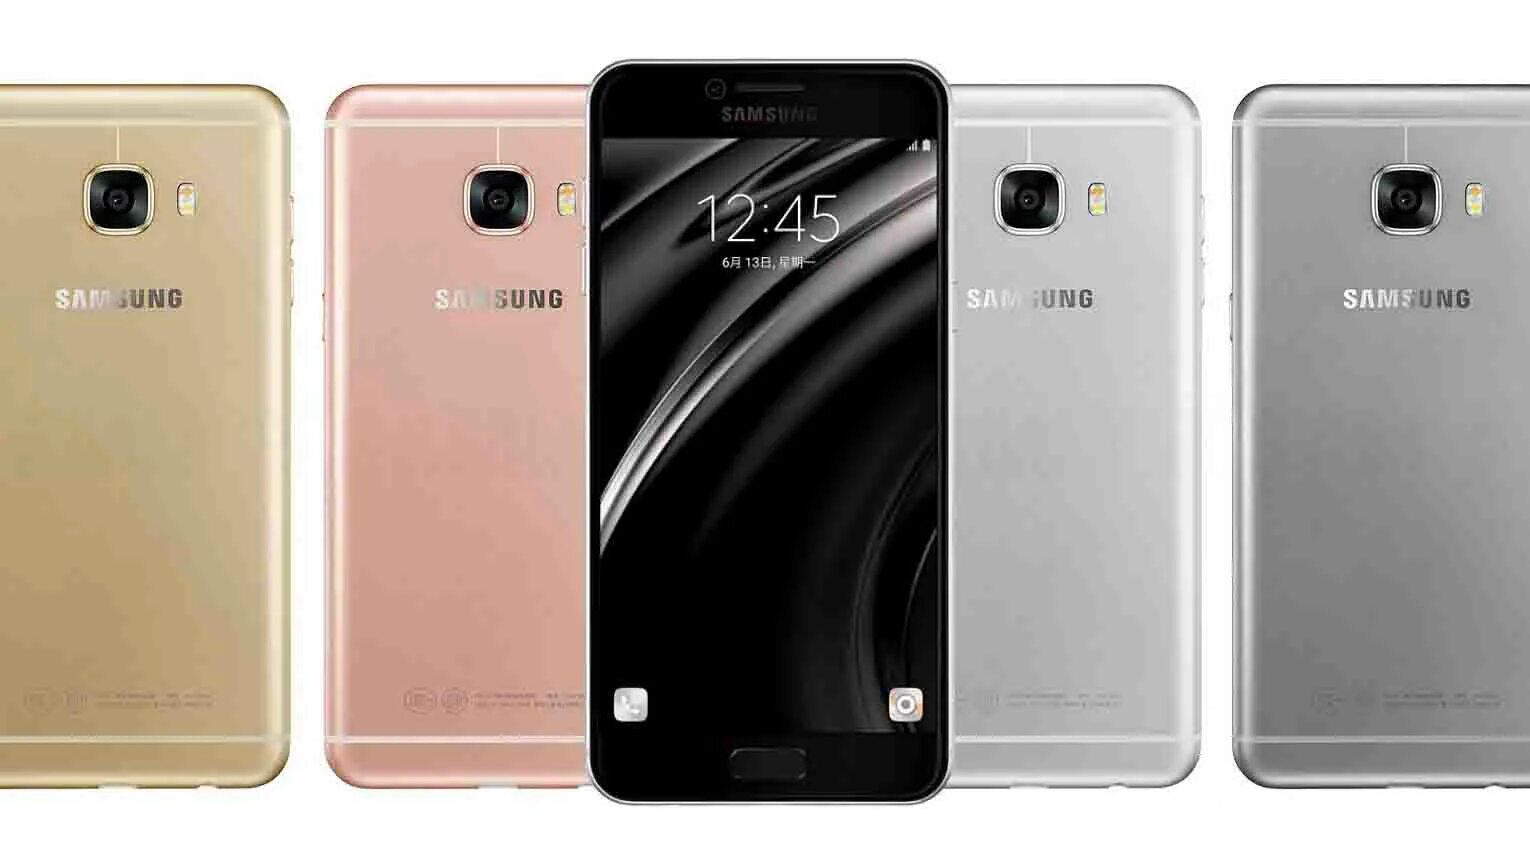 Samsung Galaxy c7 32gb. Samsung Galaxy c5 Pro. Samsung Galaxy c7 Pro. Samsung Galaxy c5 64gb. Samsung galaxy 7 pro